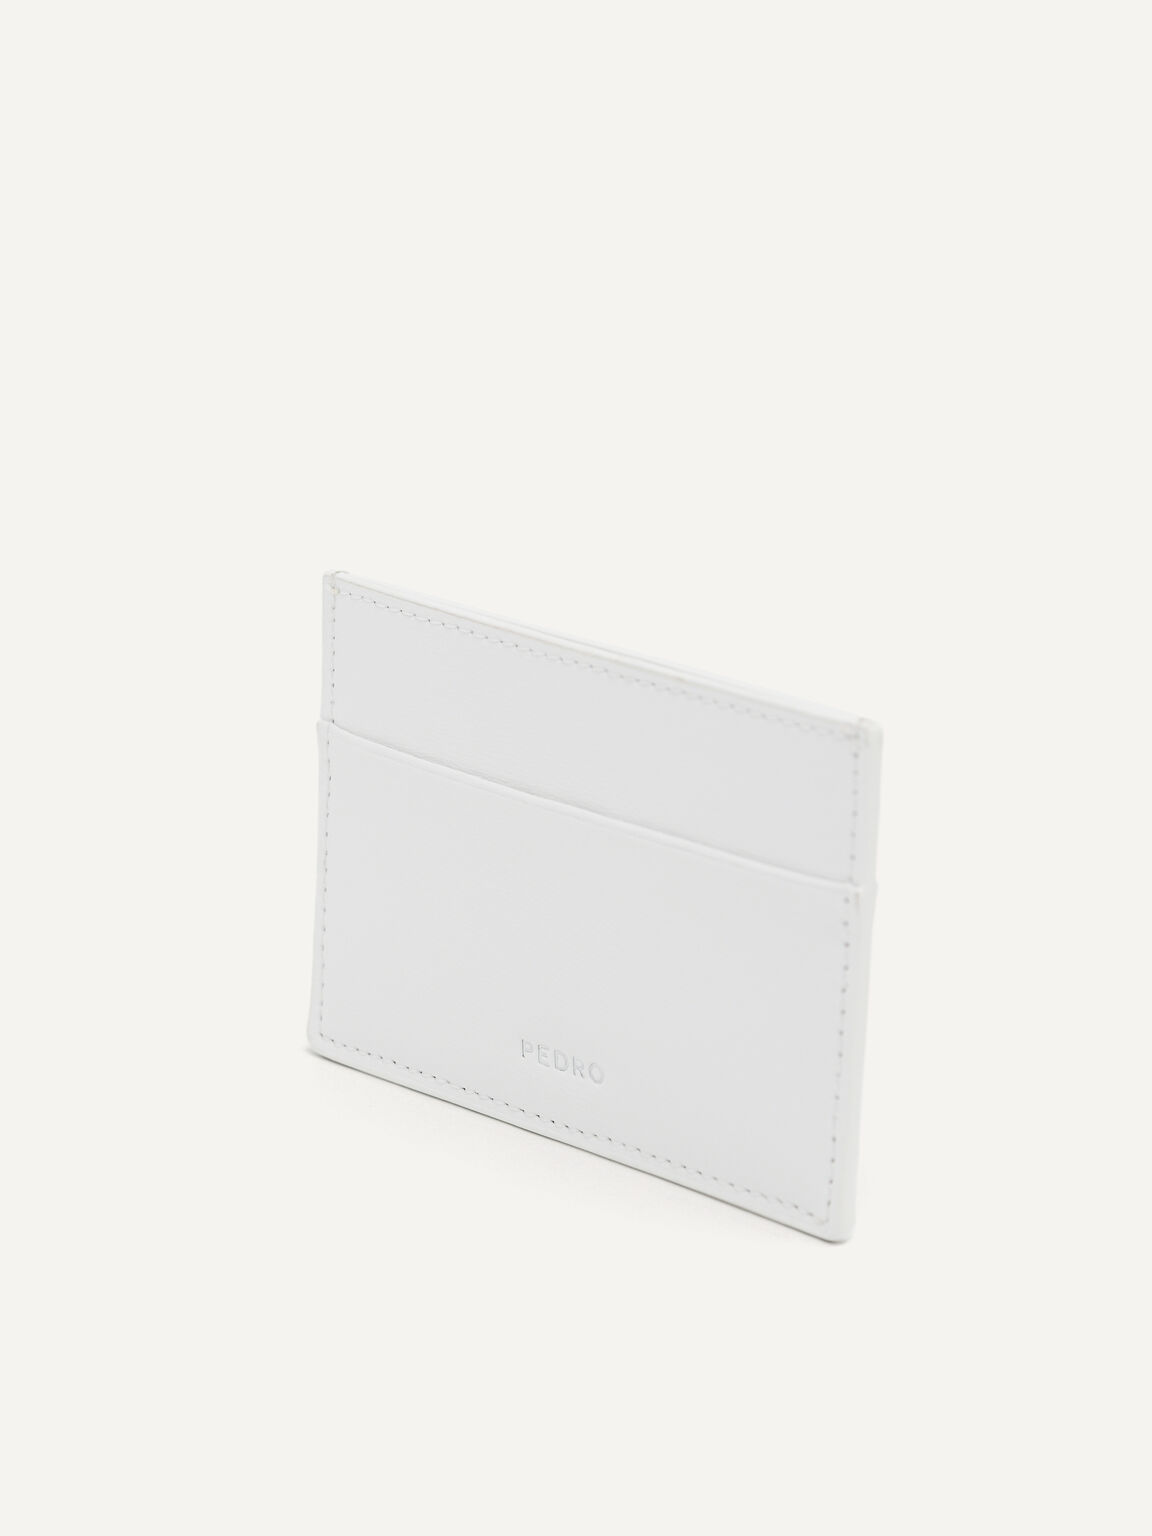 Cris-Cross Pattern Leather Cardholder, White, hi-res